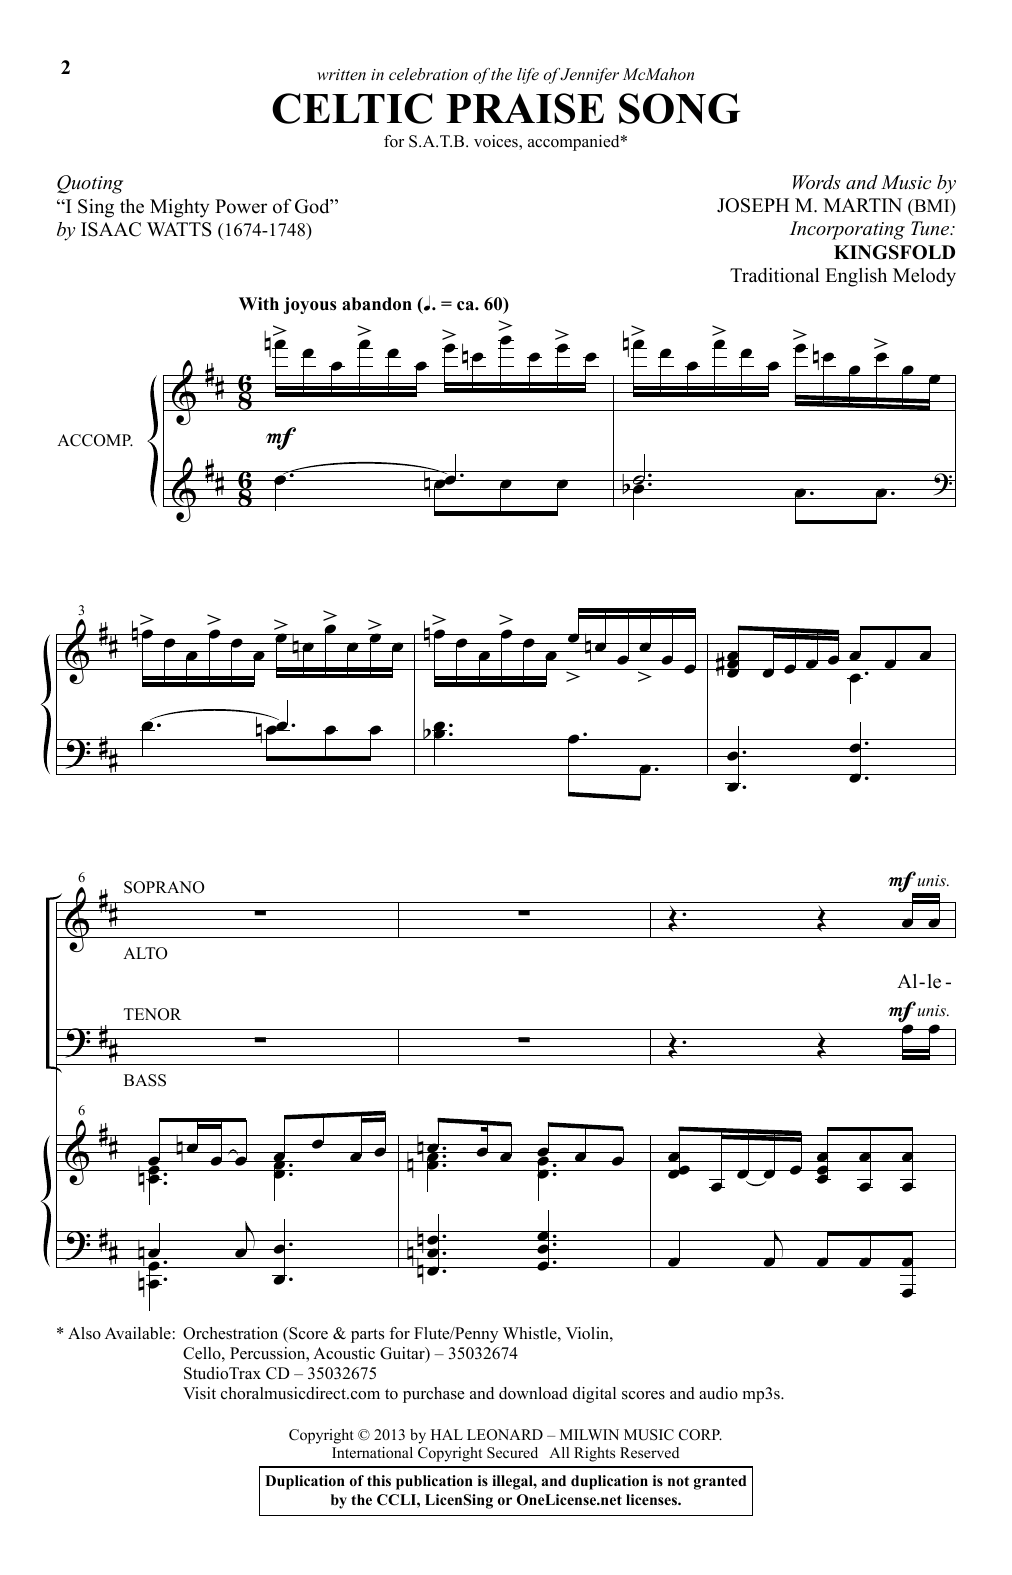 Joseph M. Martin Celtic Praise Song Sheet Music Notes & Chords for SATB Choir - Download or Print PDF